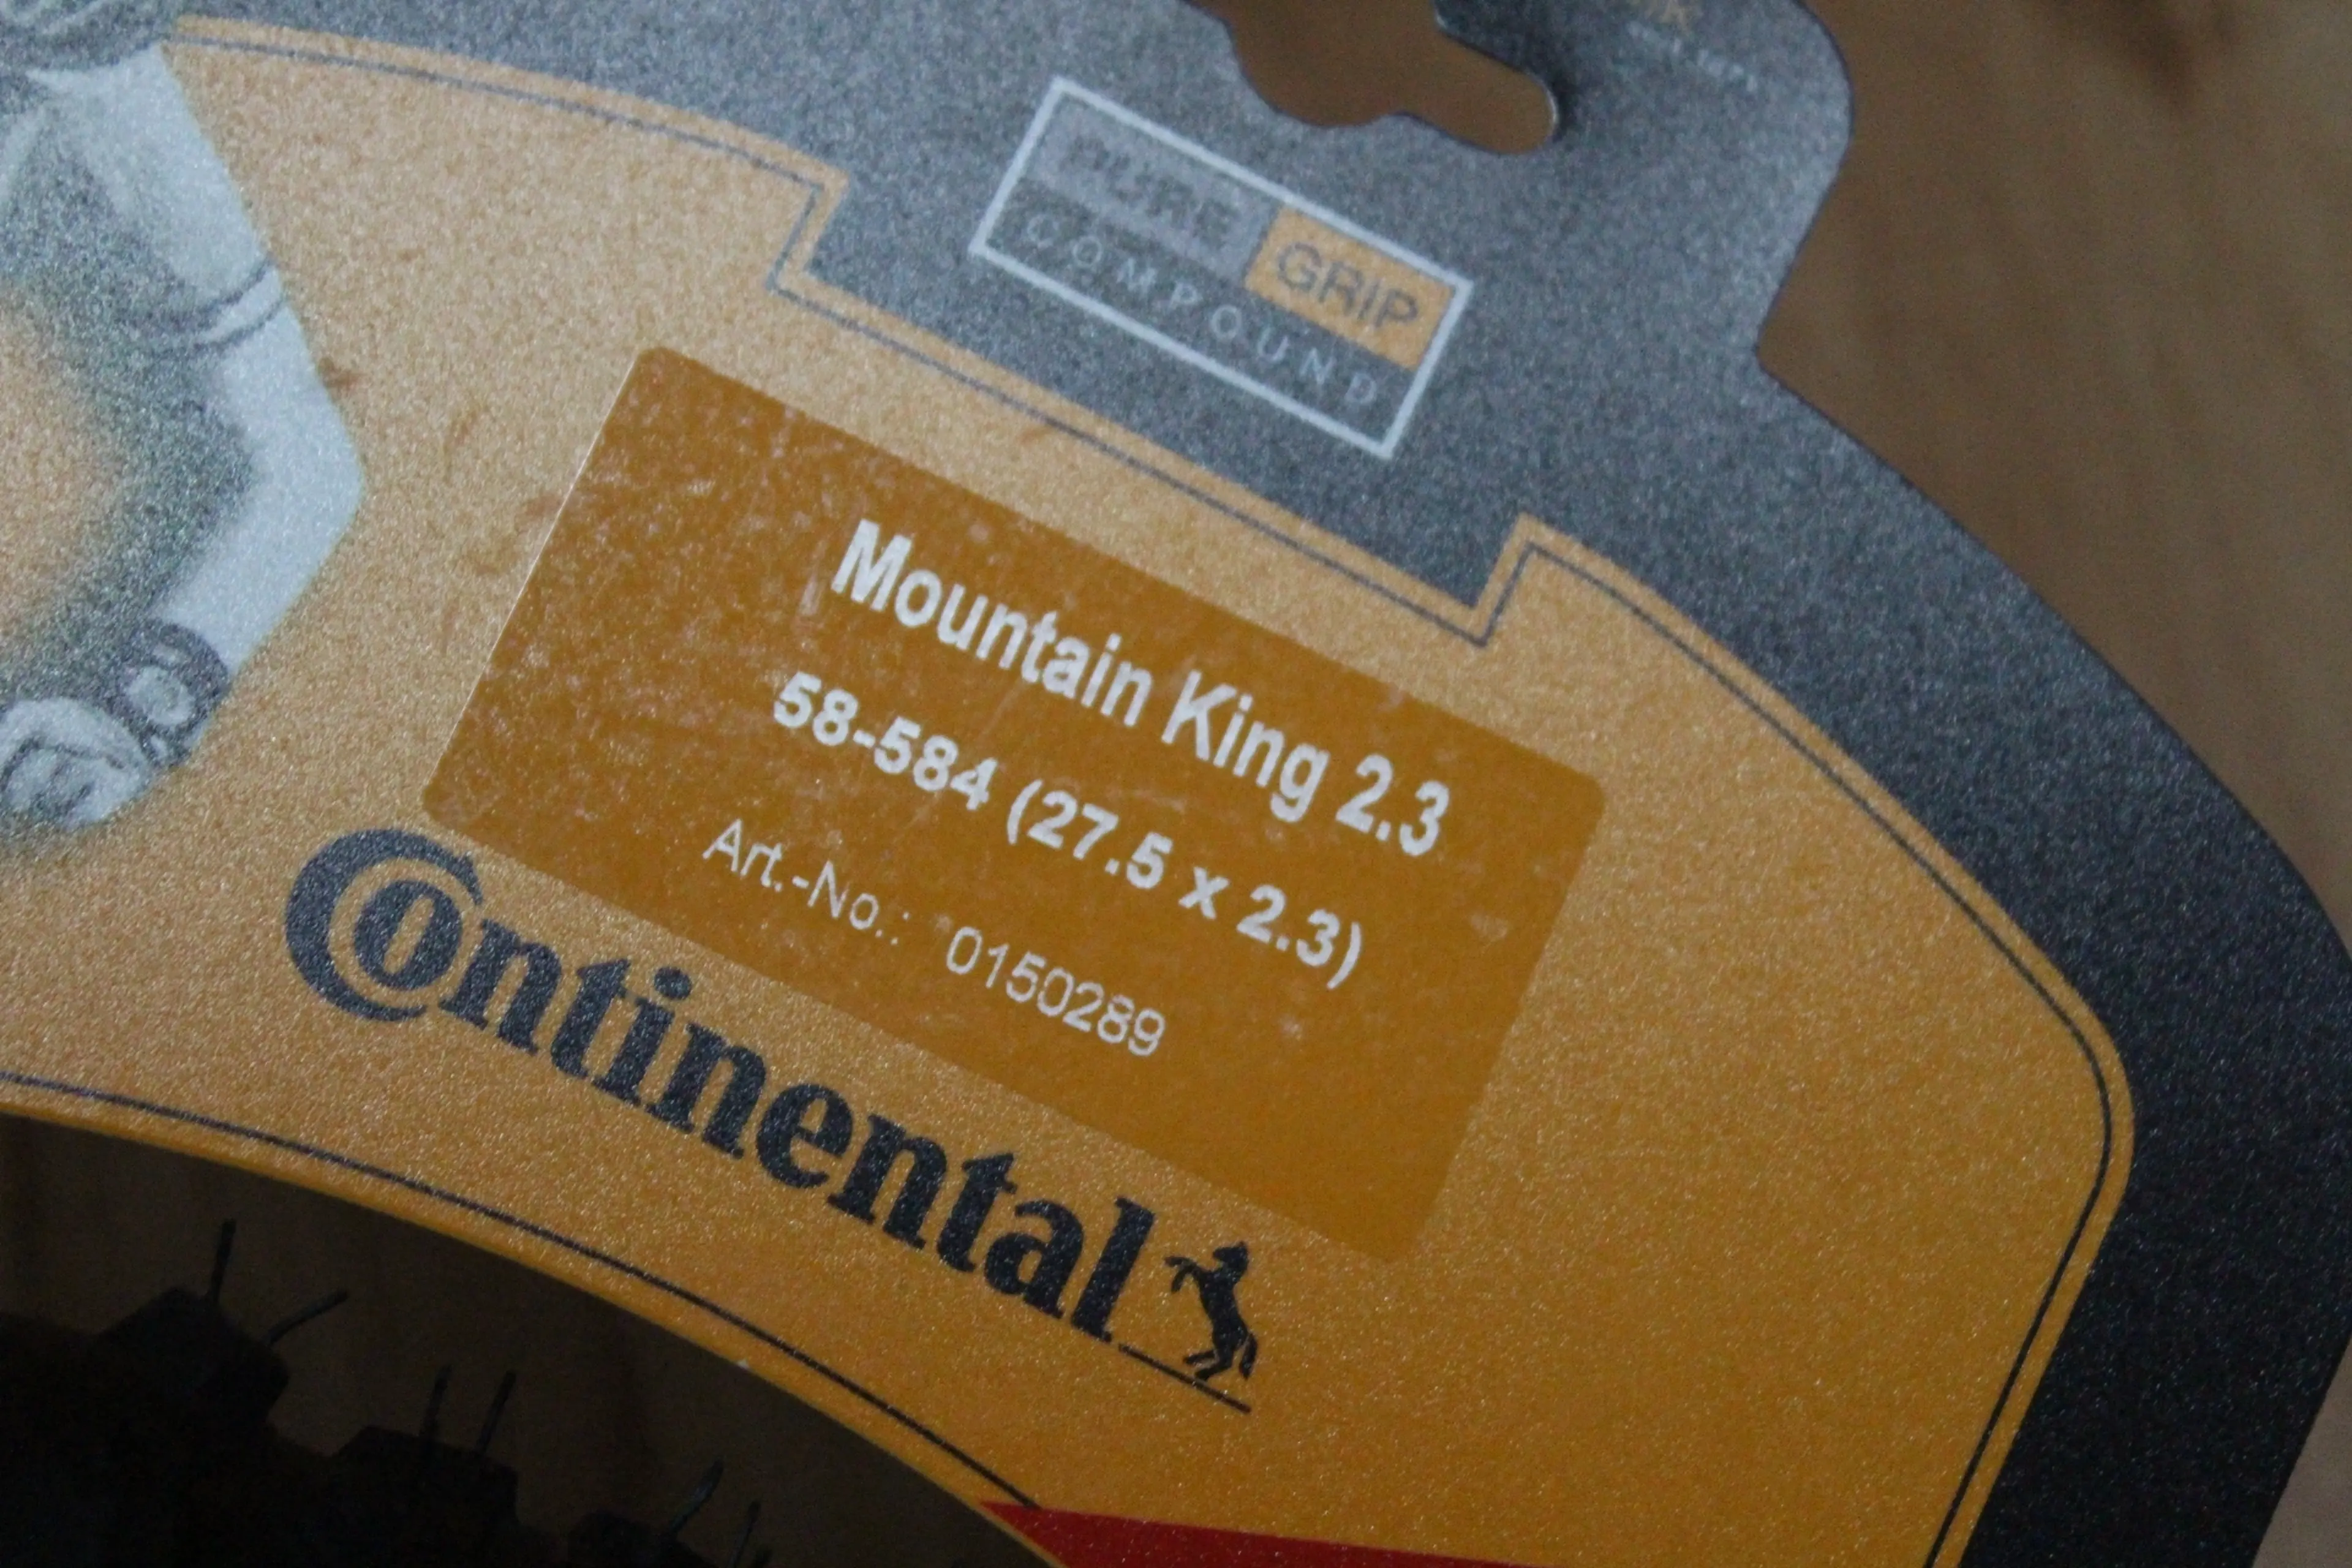 3. Continental Mountain King 3 ShieldWall Tubeless 27.5x2.3